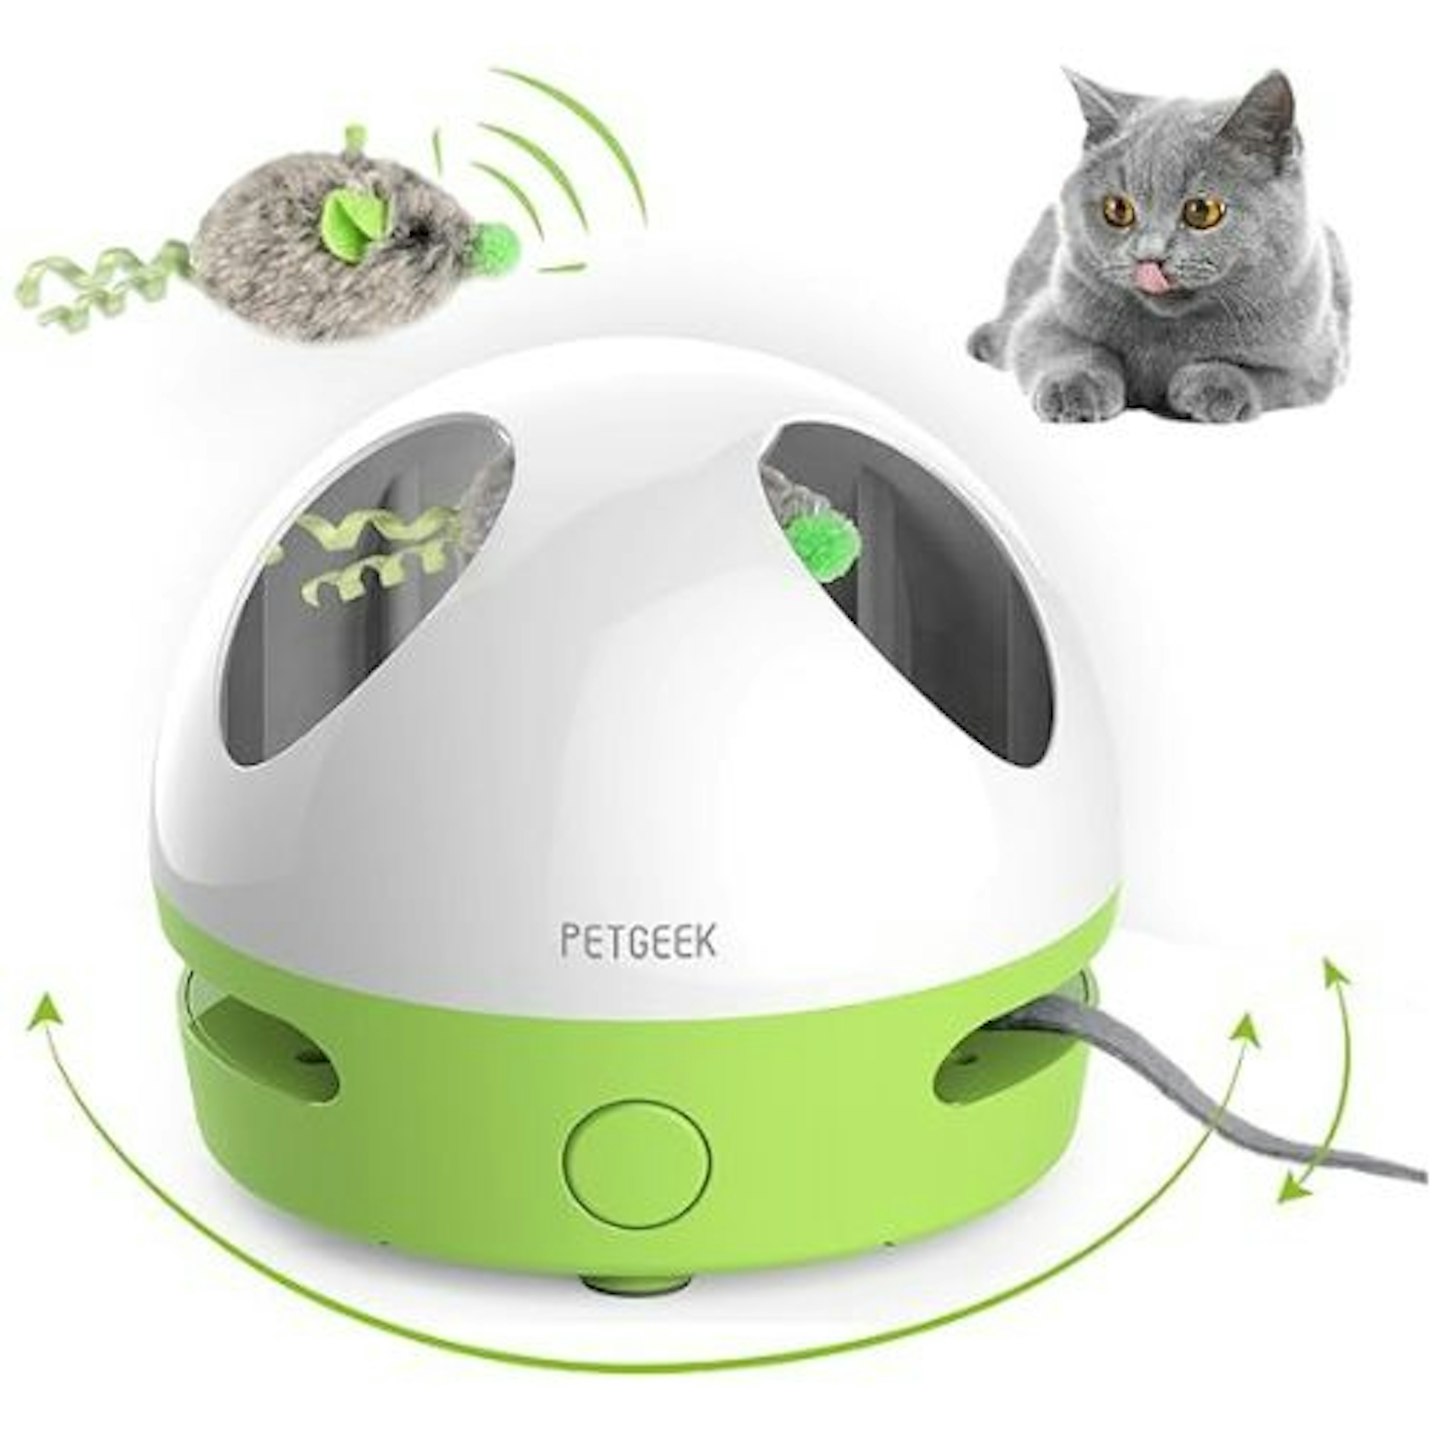 PETGEEK Interactive Hide Mouse Cat Toy